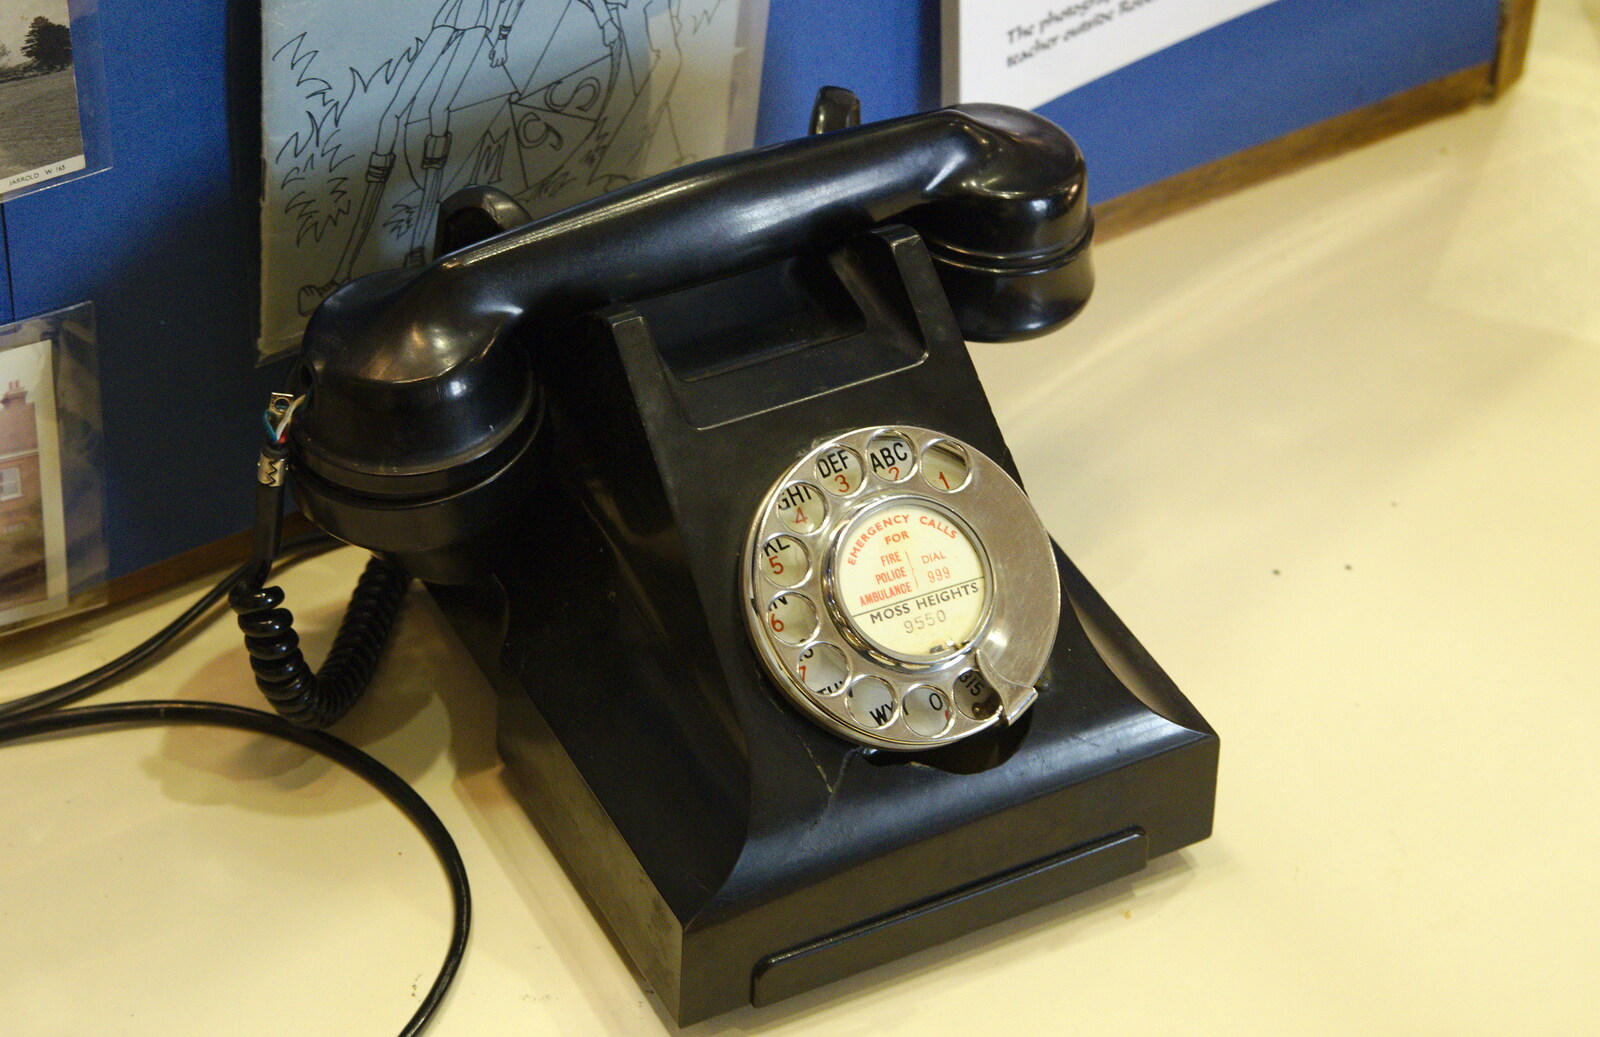 More random old hardware: a 1940s telephone from A Trip to Framlingham Castle, Framlingham, Suffolk - 16th February 2014